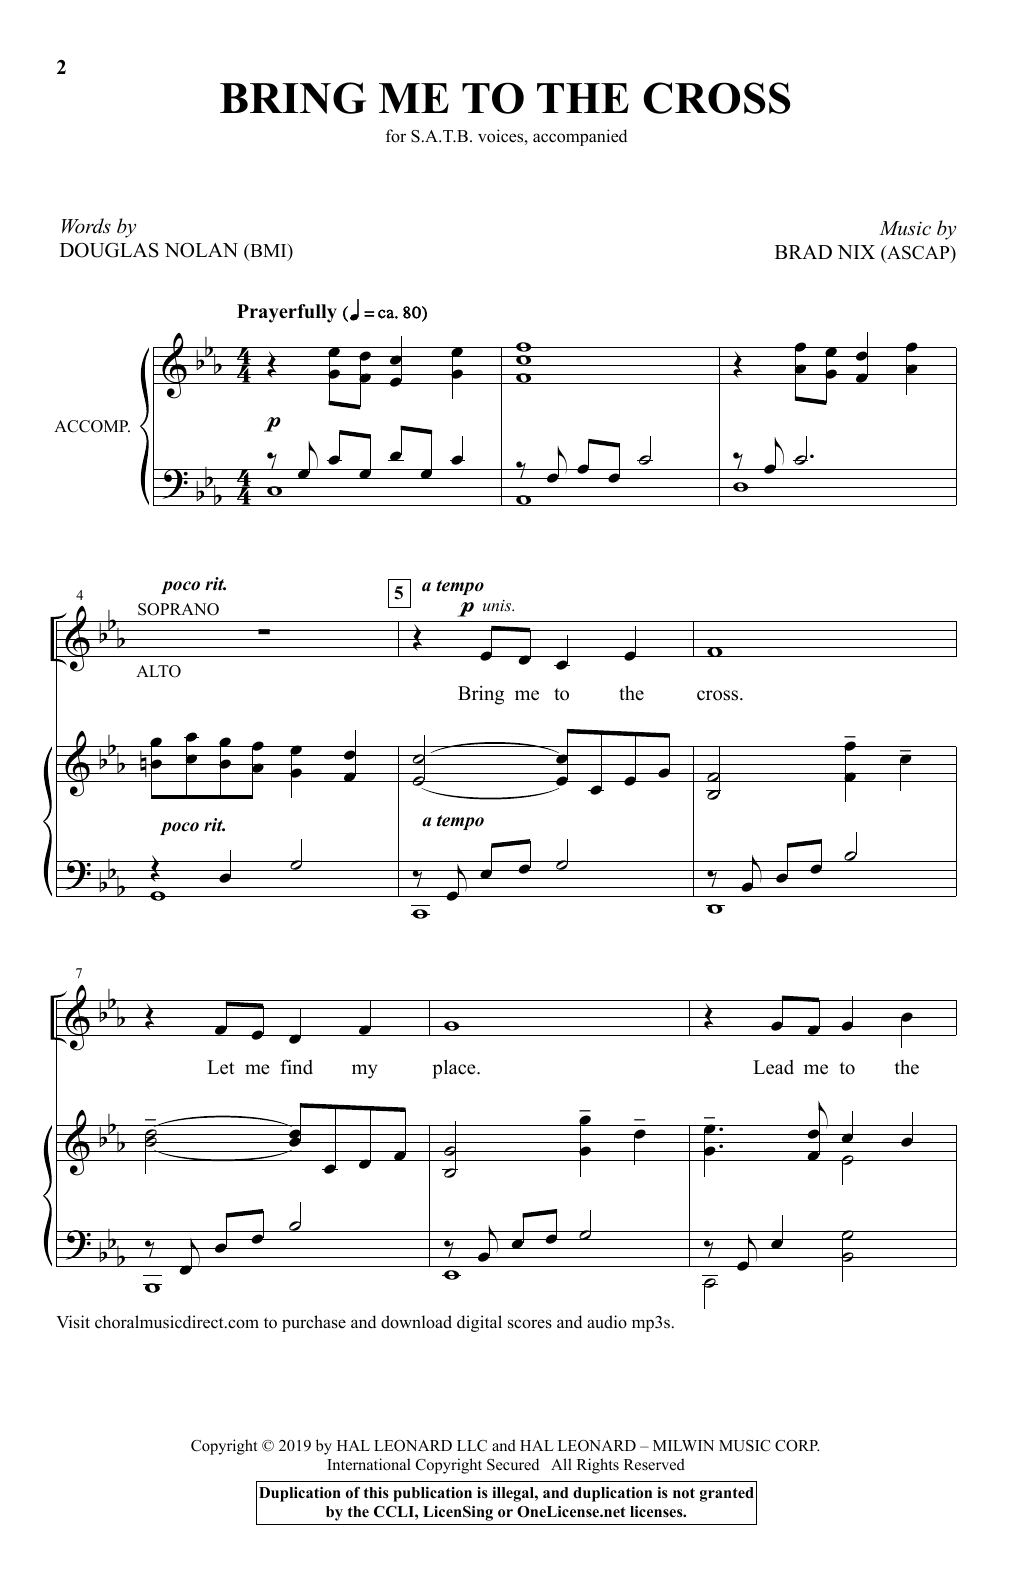 Douglas Nolan and Brad Nix Bring Me To The Cross Sheet Music Notes & Chords for SATB Choir - Download or Print PDF